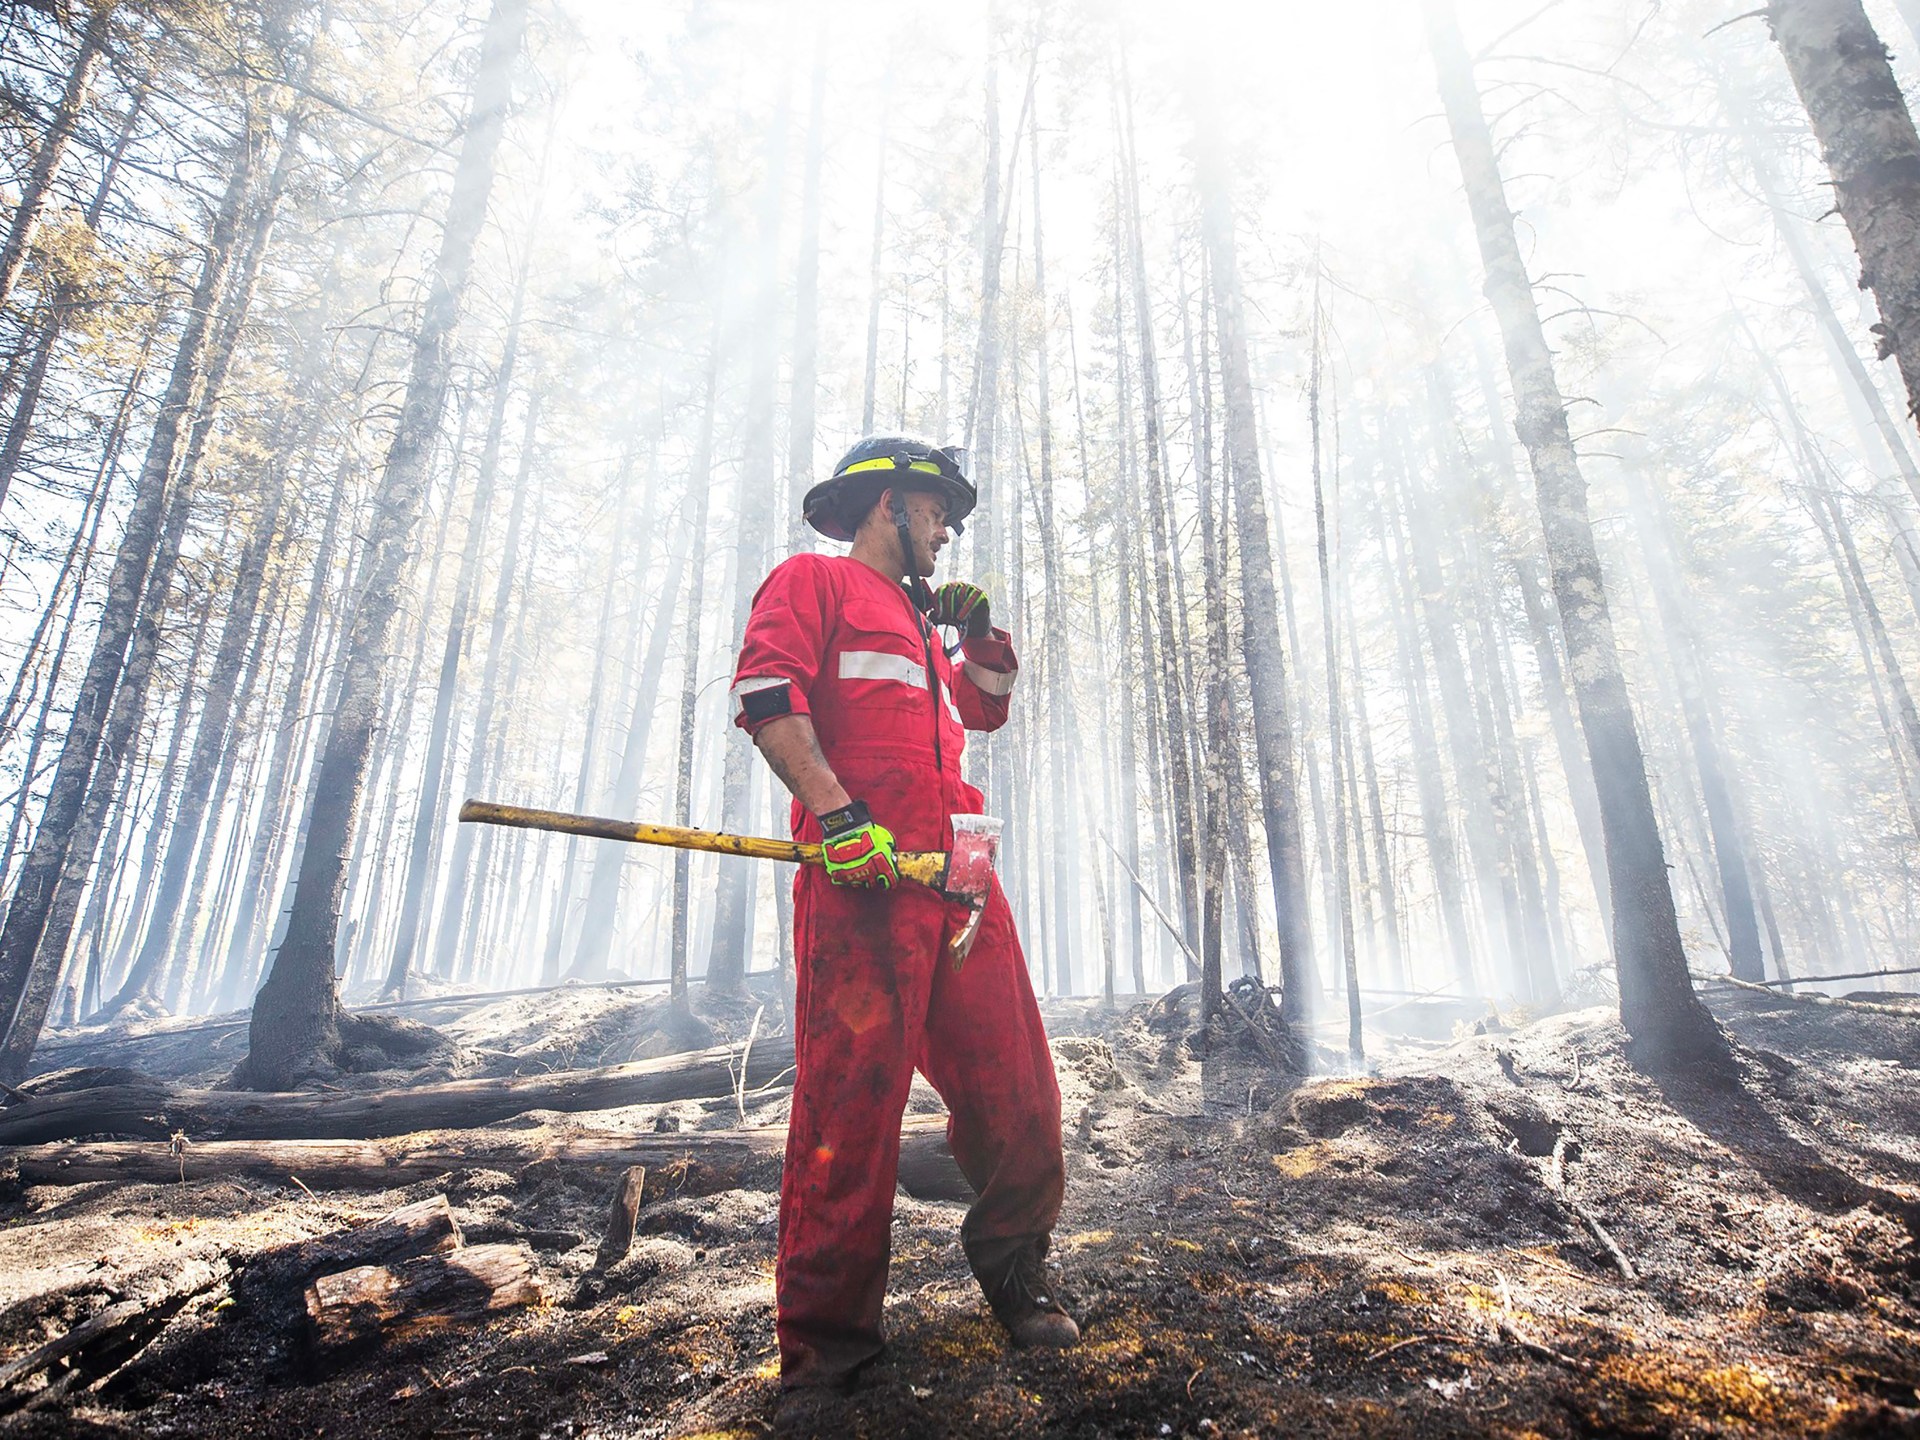 Canada facing ‘deeply concerning’ wildfire season: Official